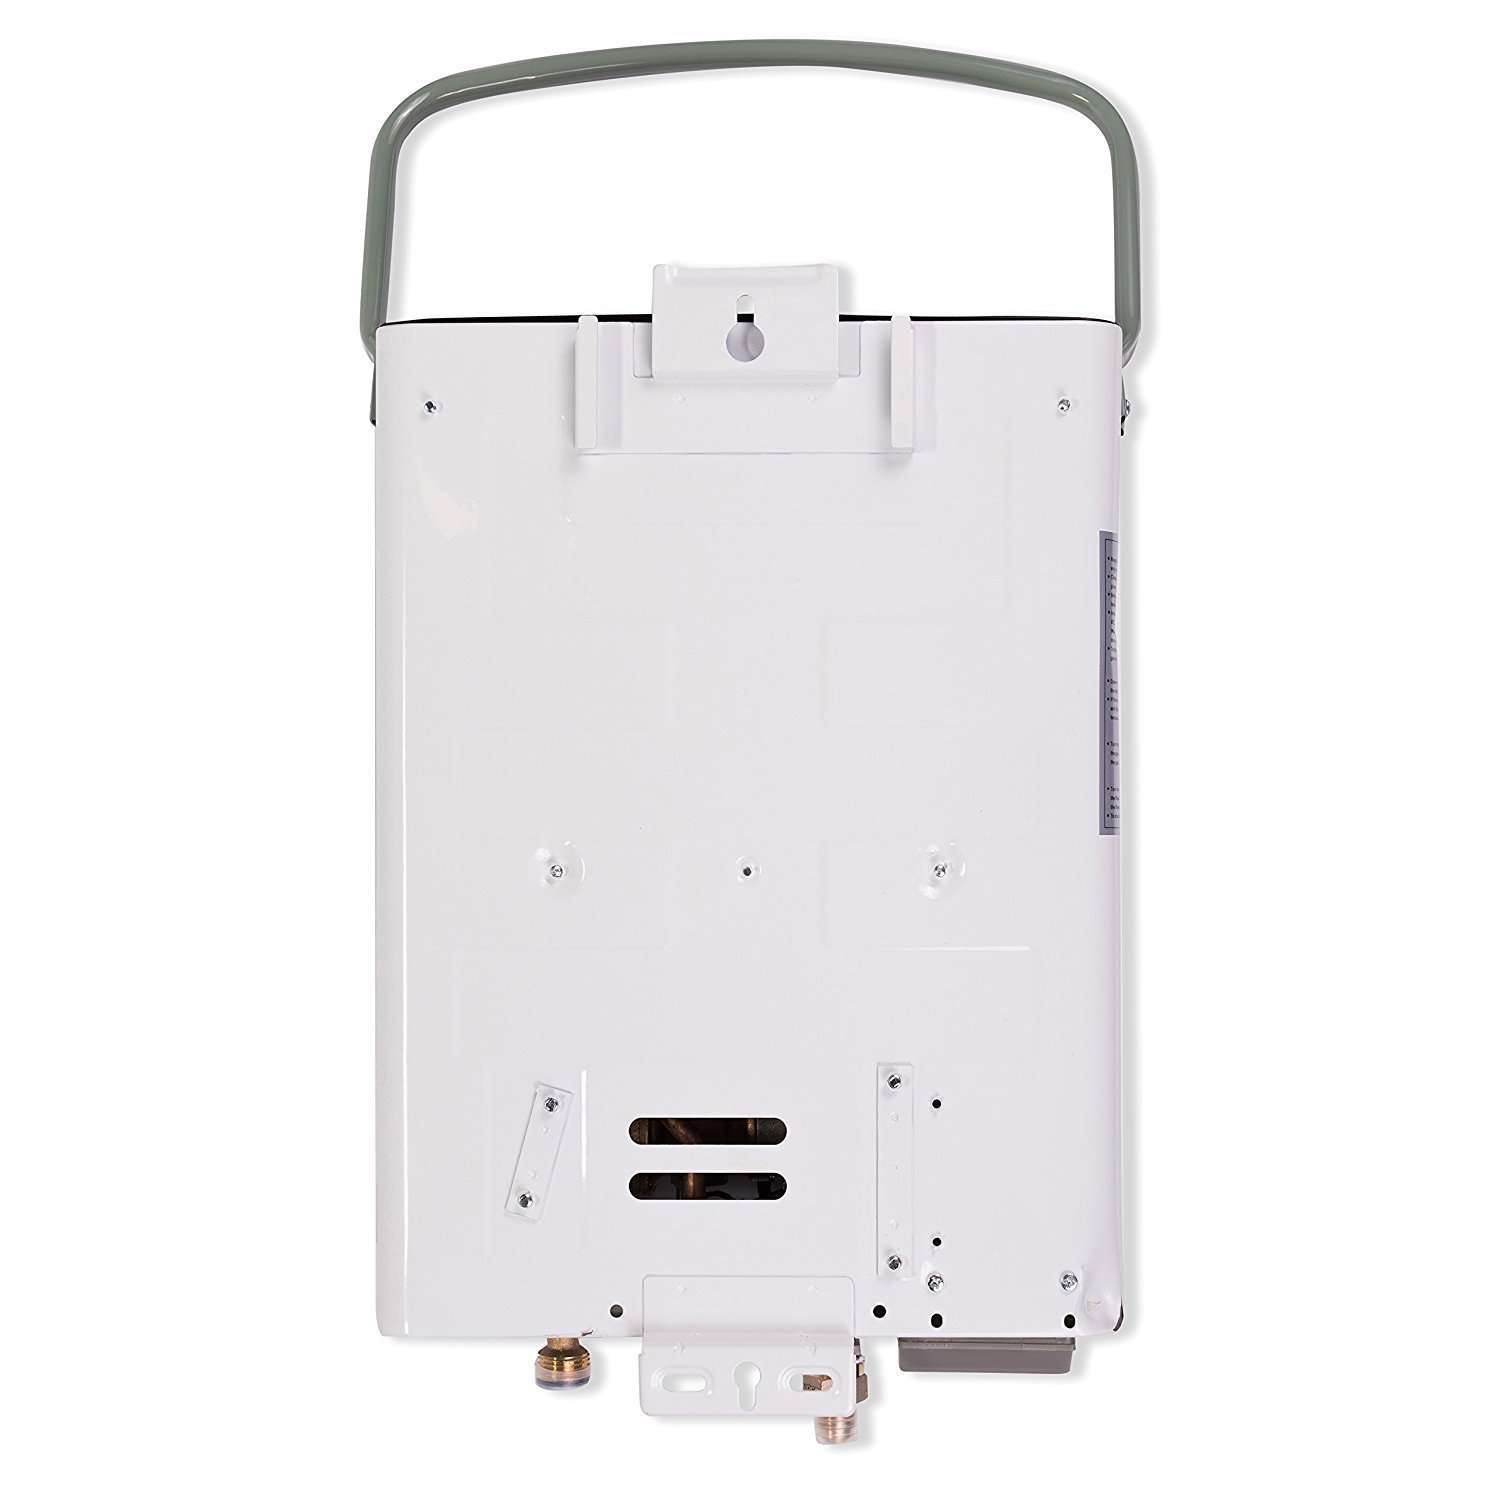 Eccotemp L5 1.5 GPM Propane Tankless Water Heater Manufacturer RFB